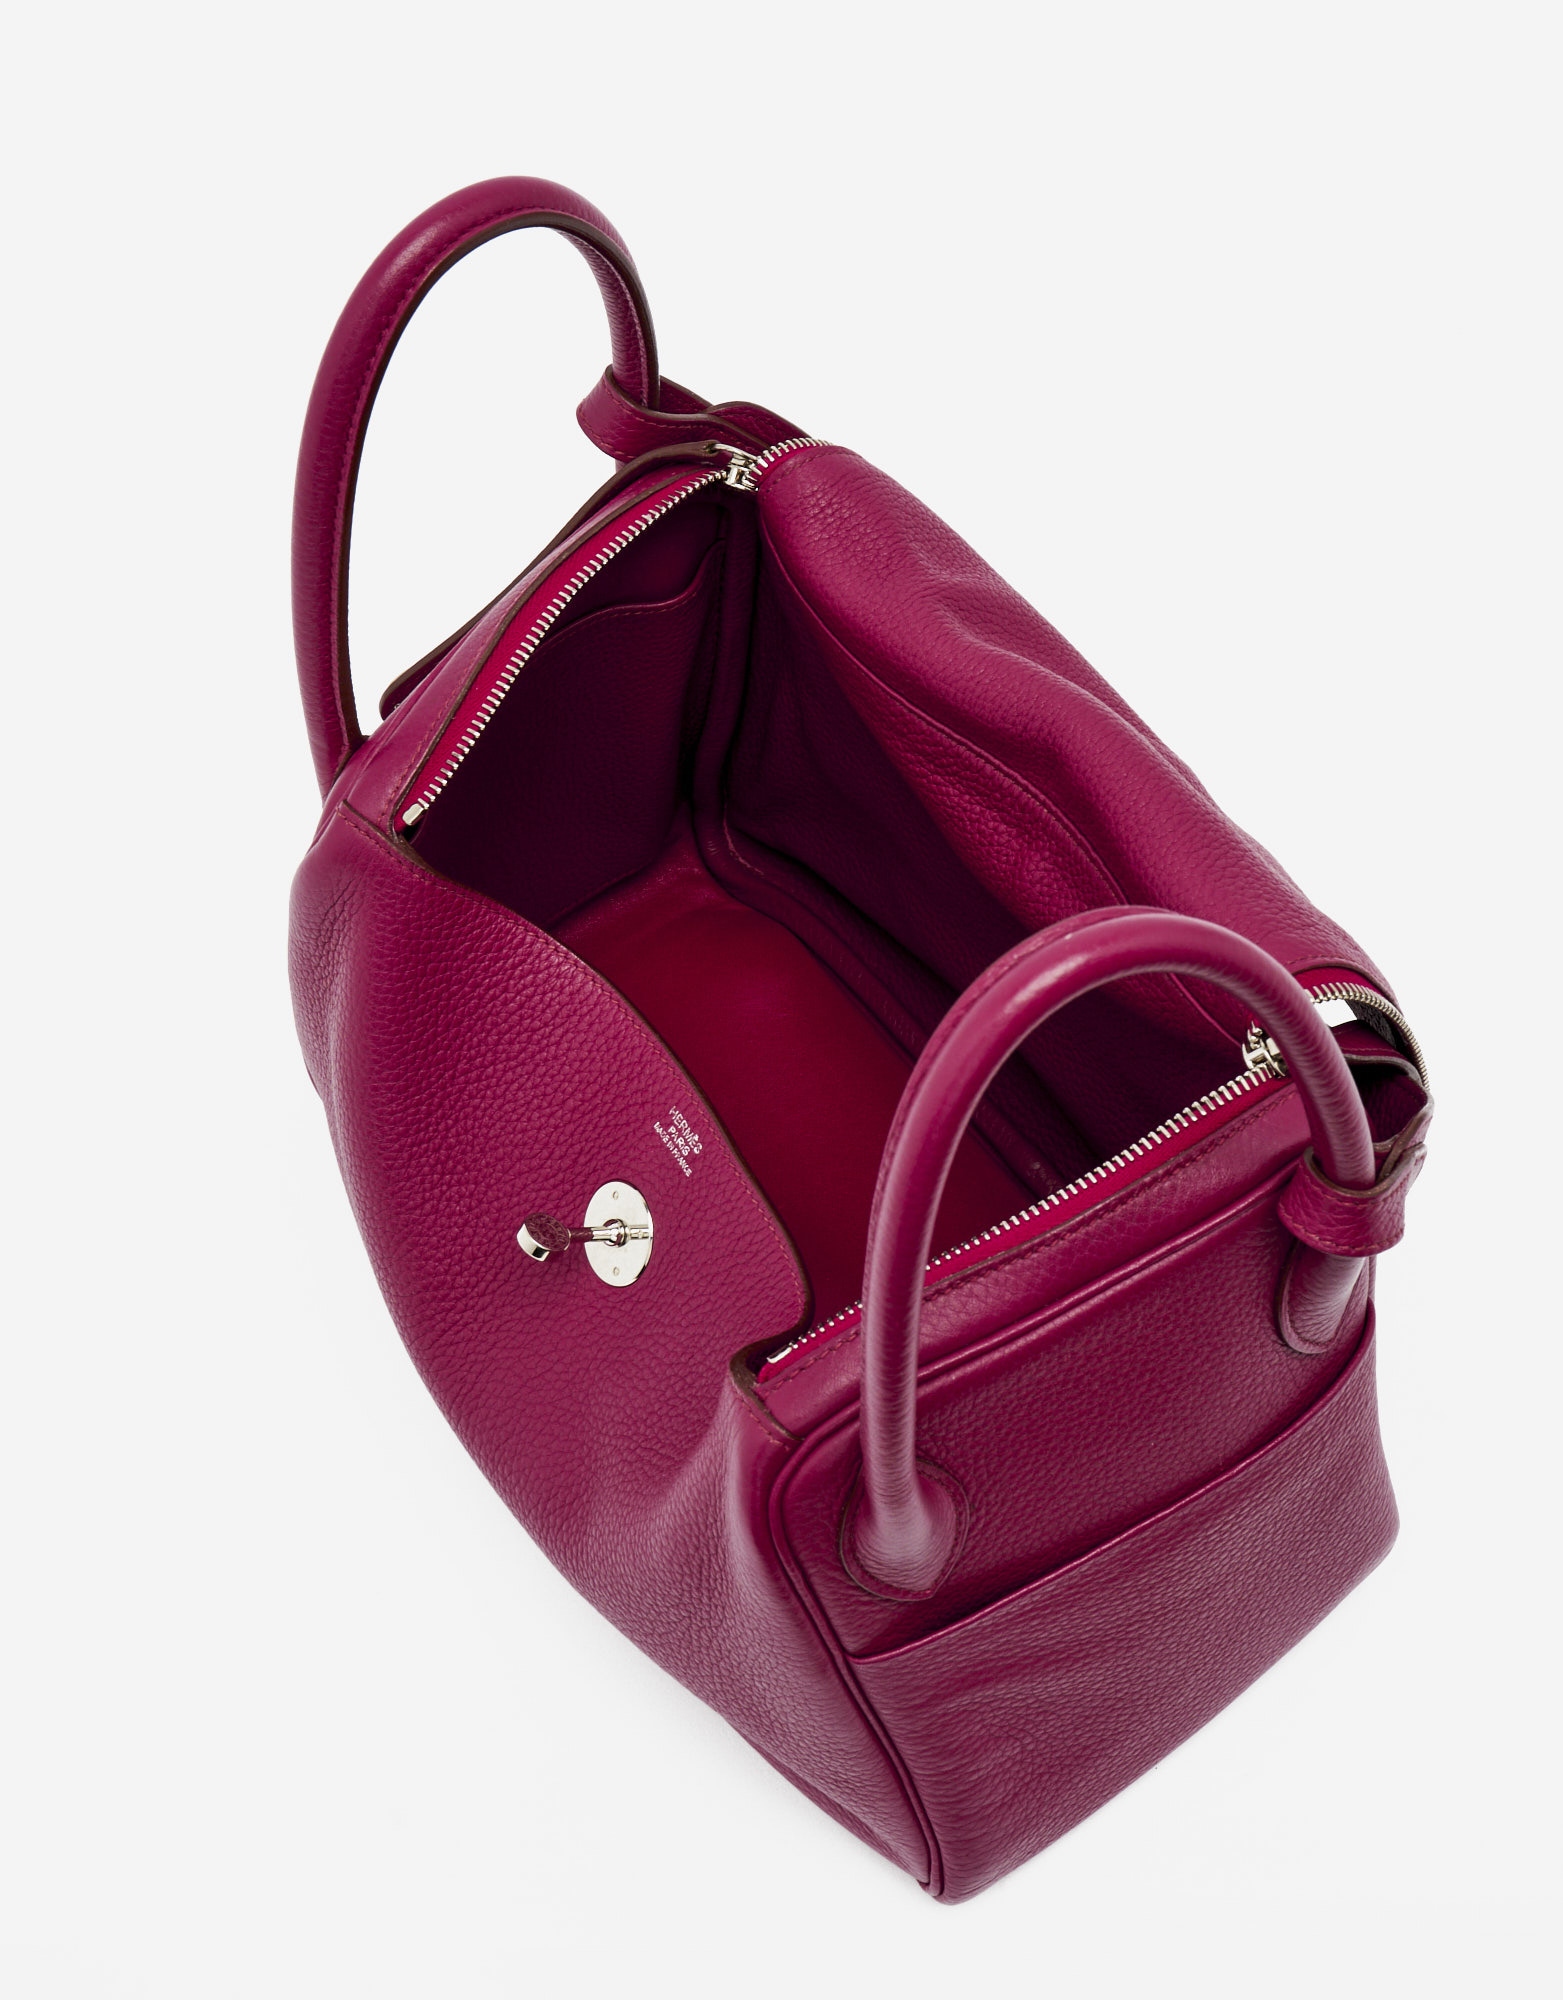 Lubbb my new bag!! #hermes #hermeslindy #lindy30 #fashionaddict